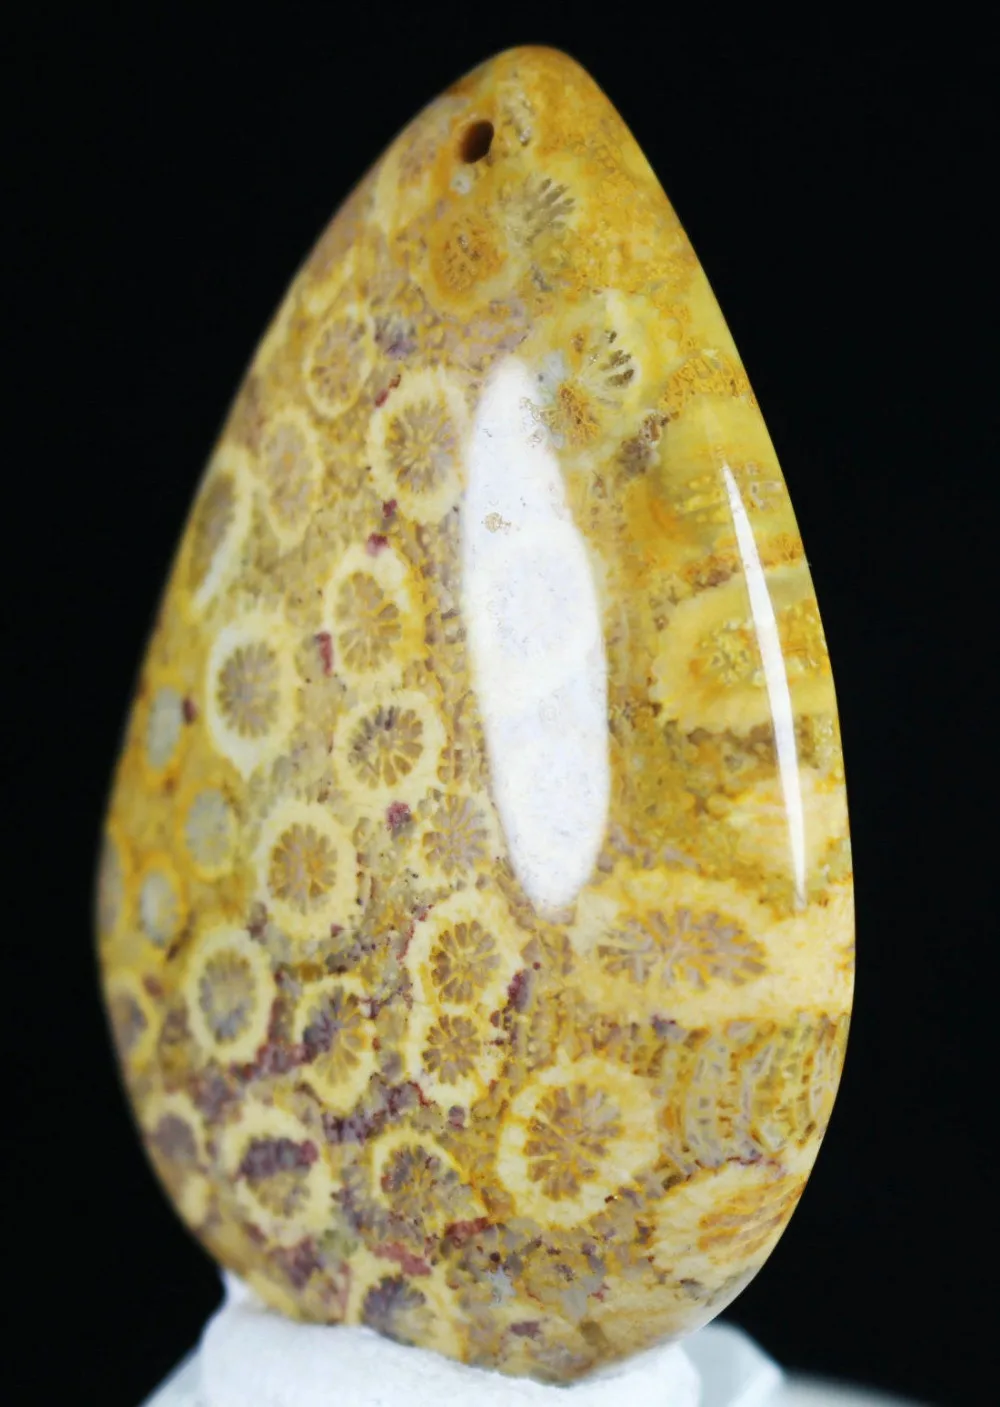 10x48mm Long Rectangle-Shaped Genuine Fossil Coral Jade Pendant Natural Chrysanthemum Stone 2pcs --1 Pair